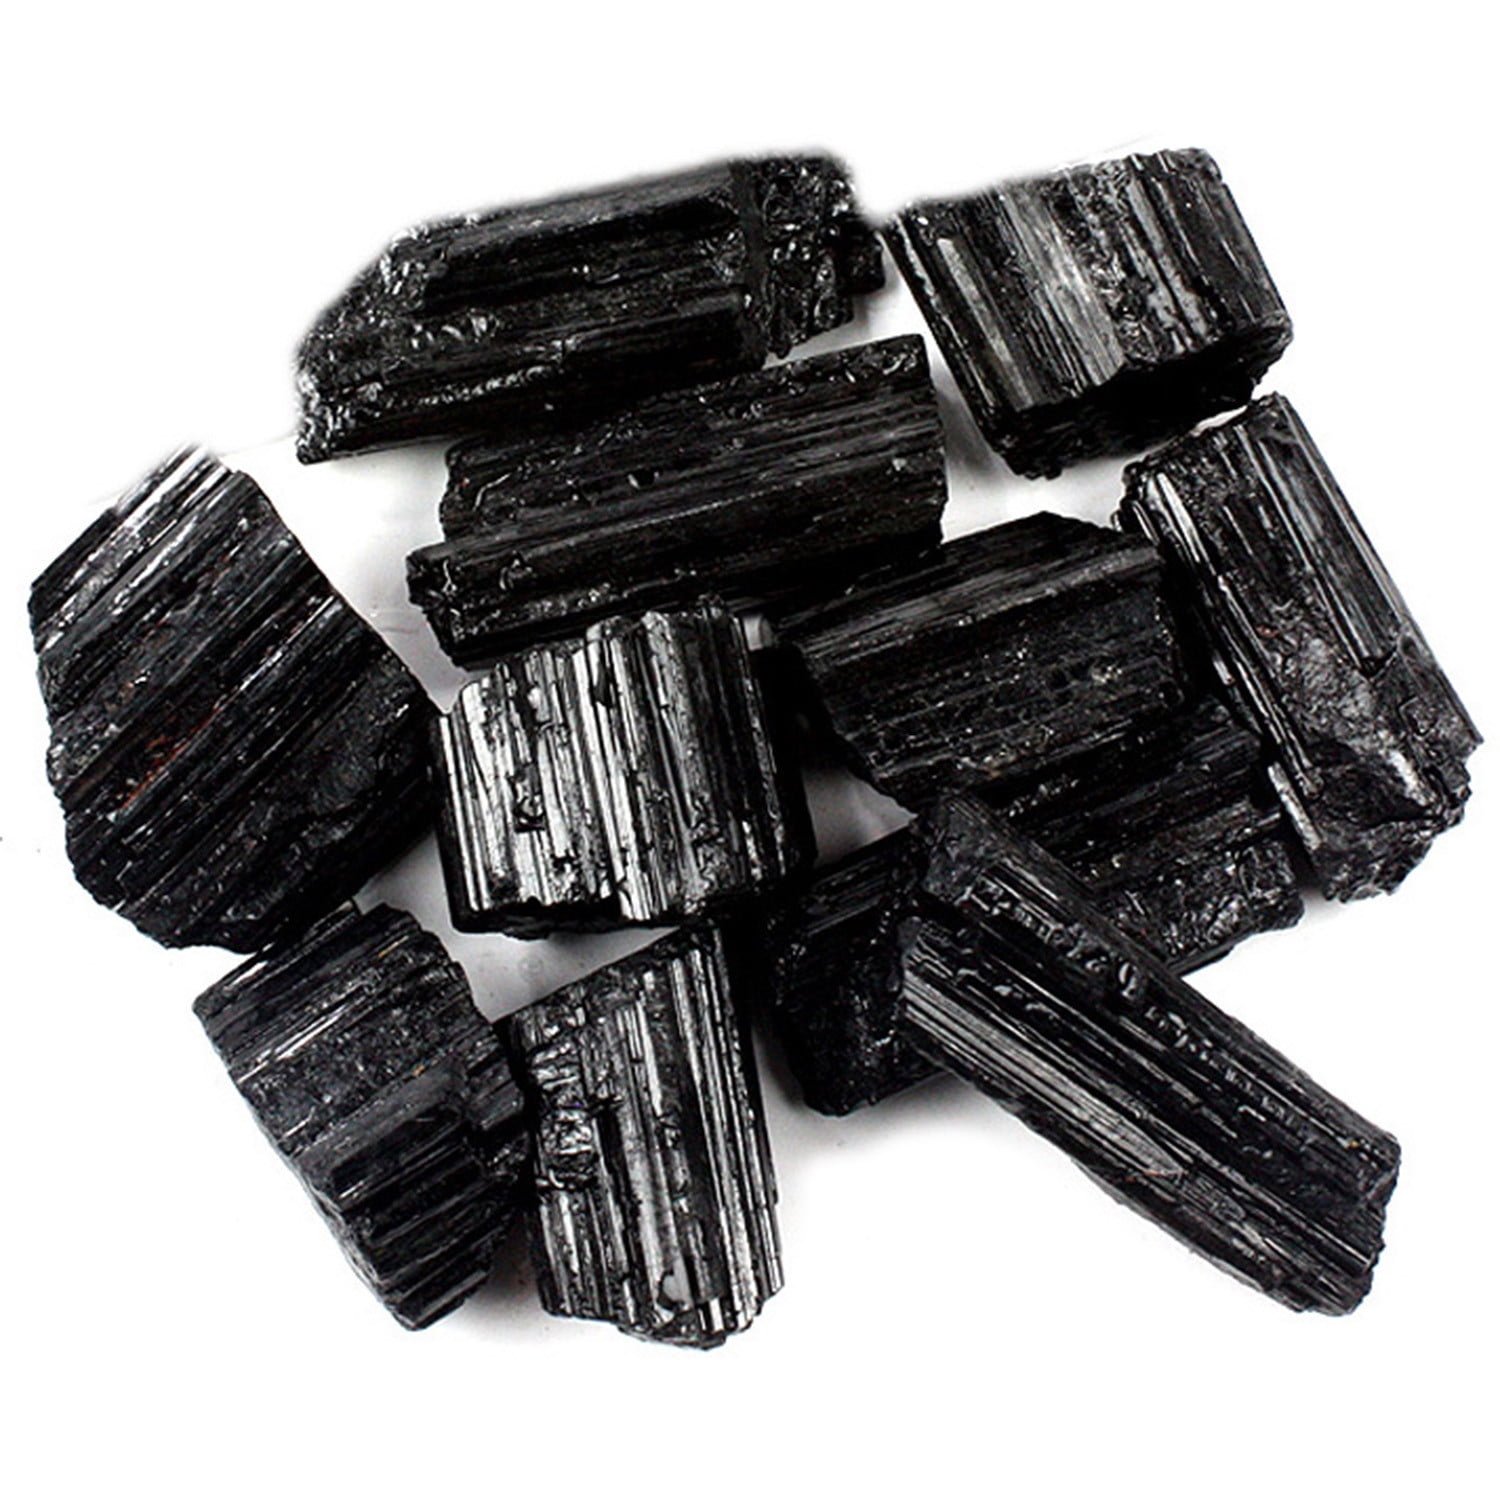 2000 Carat Bulk Wholesale Lot Natural Rough Black Tourmaline Stones Rock Crystal 